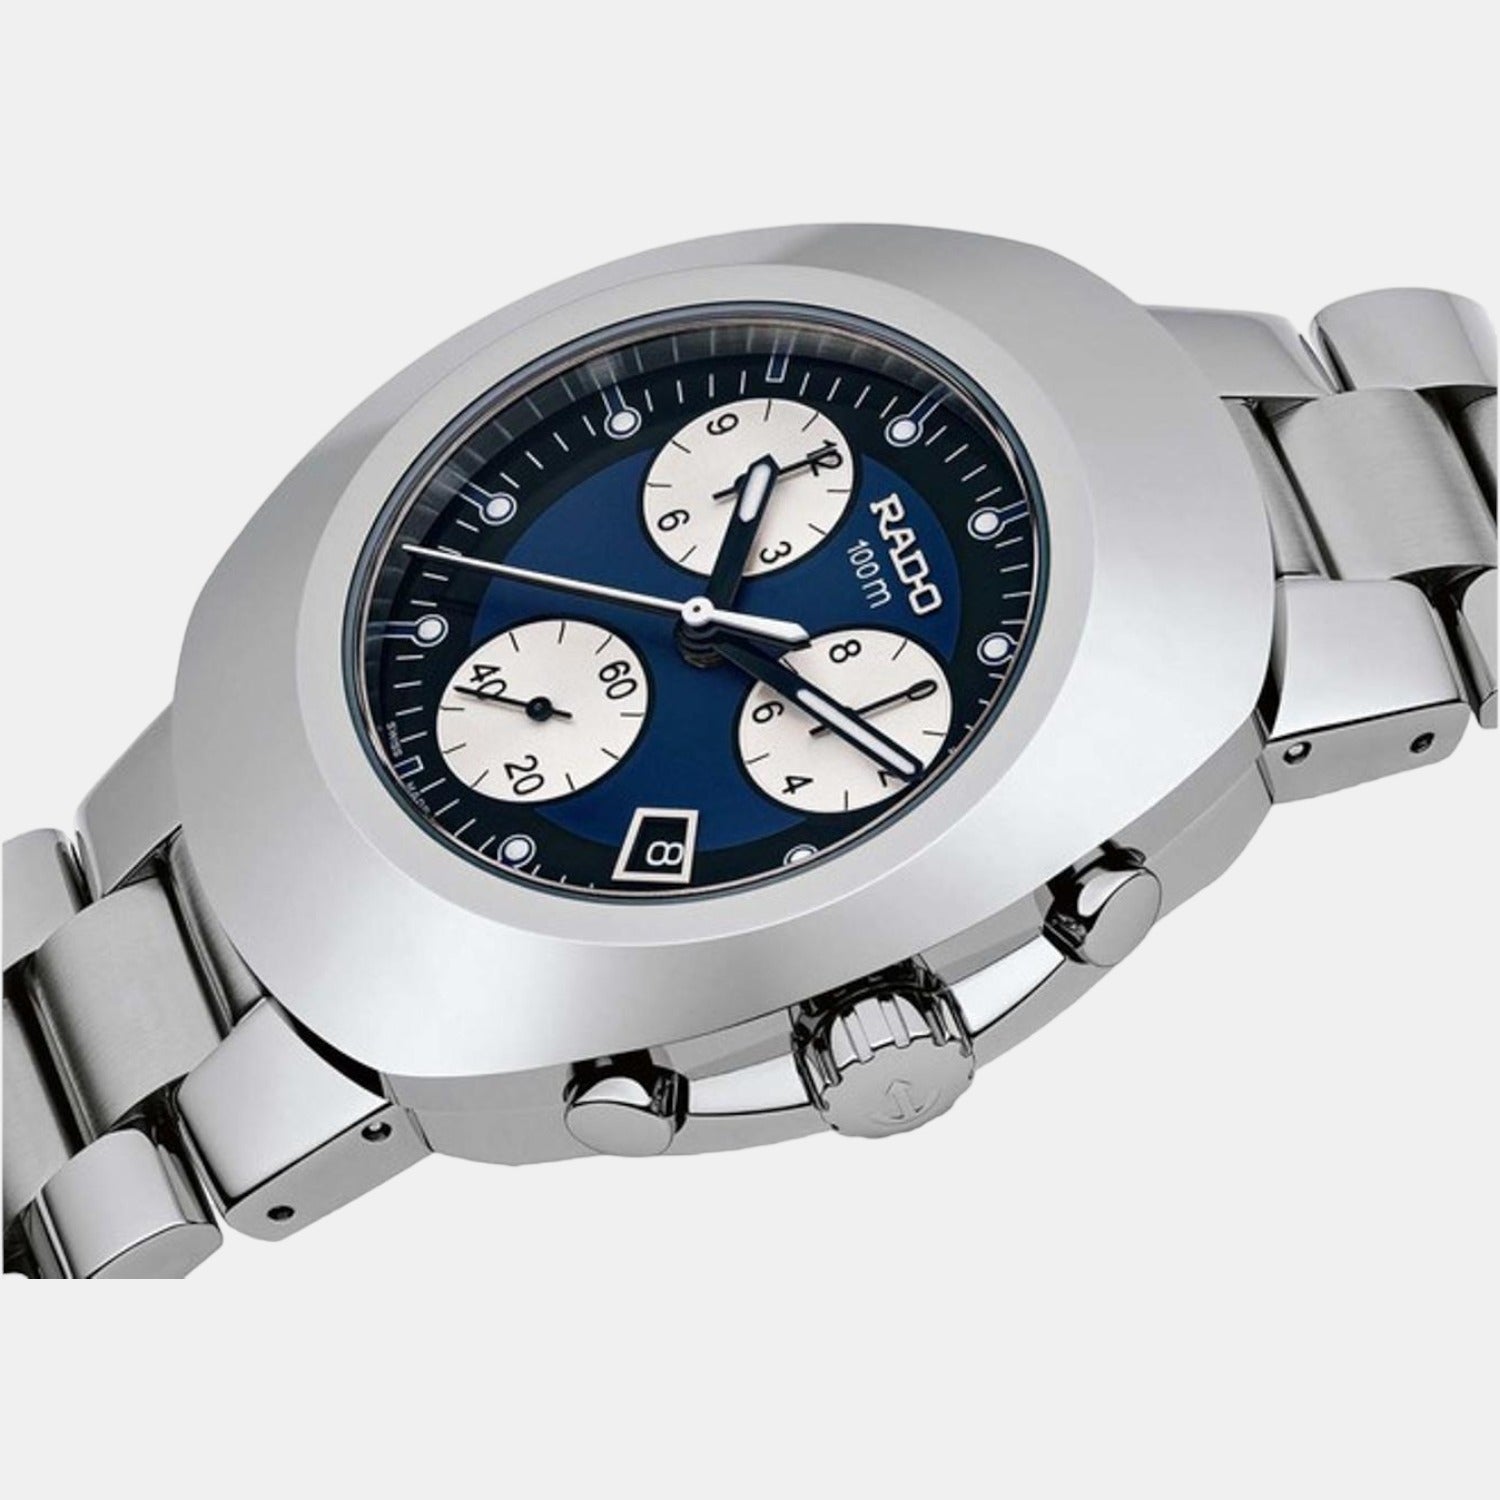 rado-stainless-steel-blue-analog-men-watch-r12638173